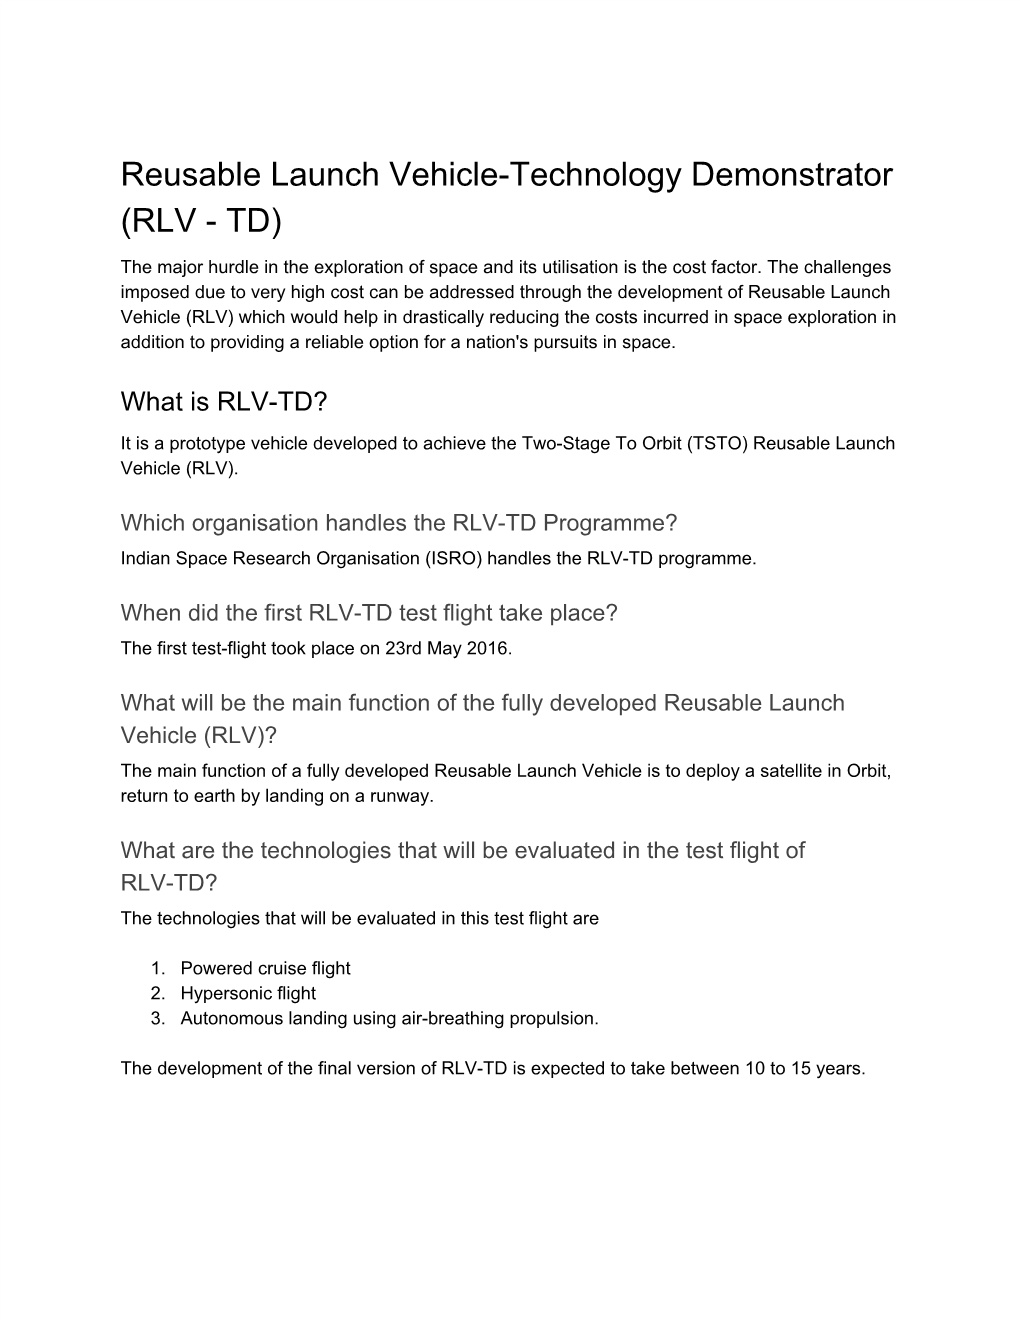 Reusable Launch Vehicle-Technology Demonstrator (RLV - TD)